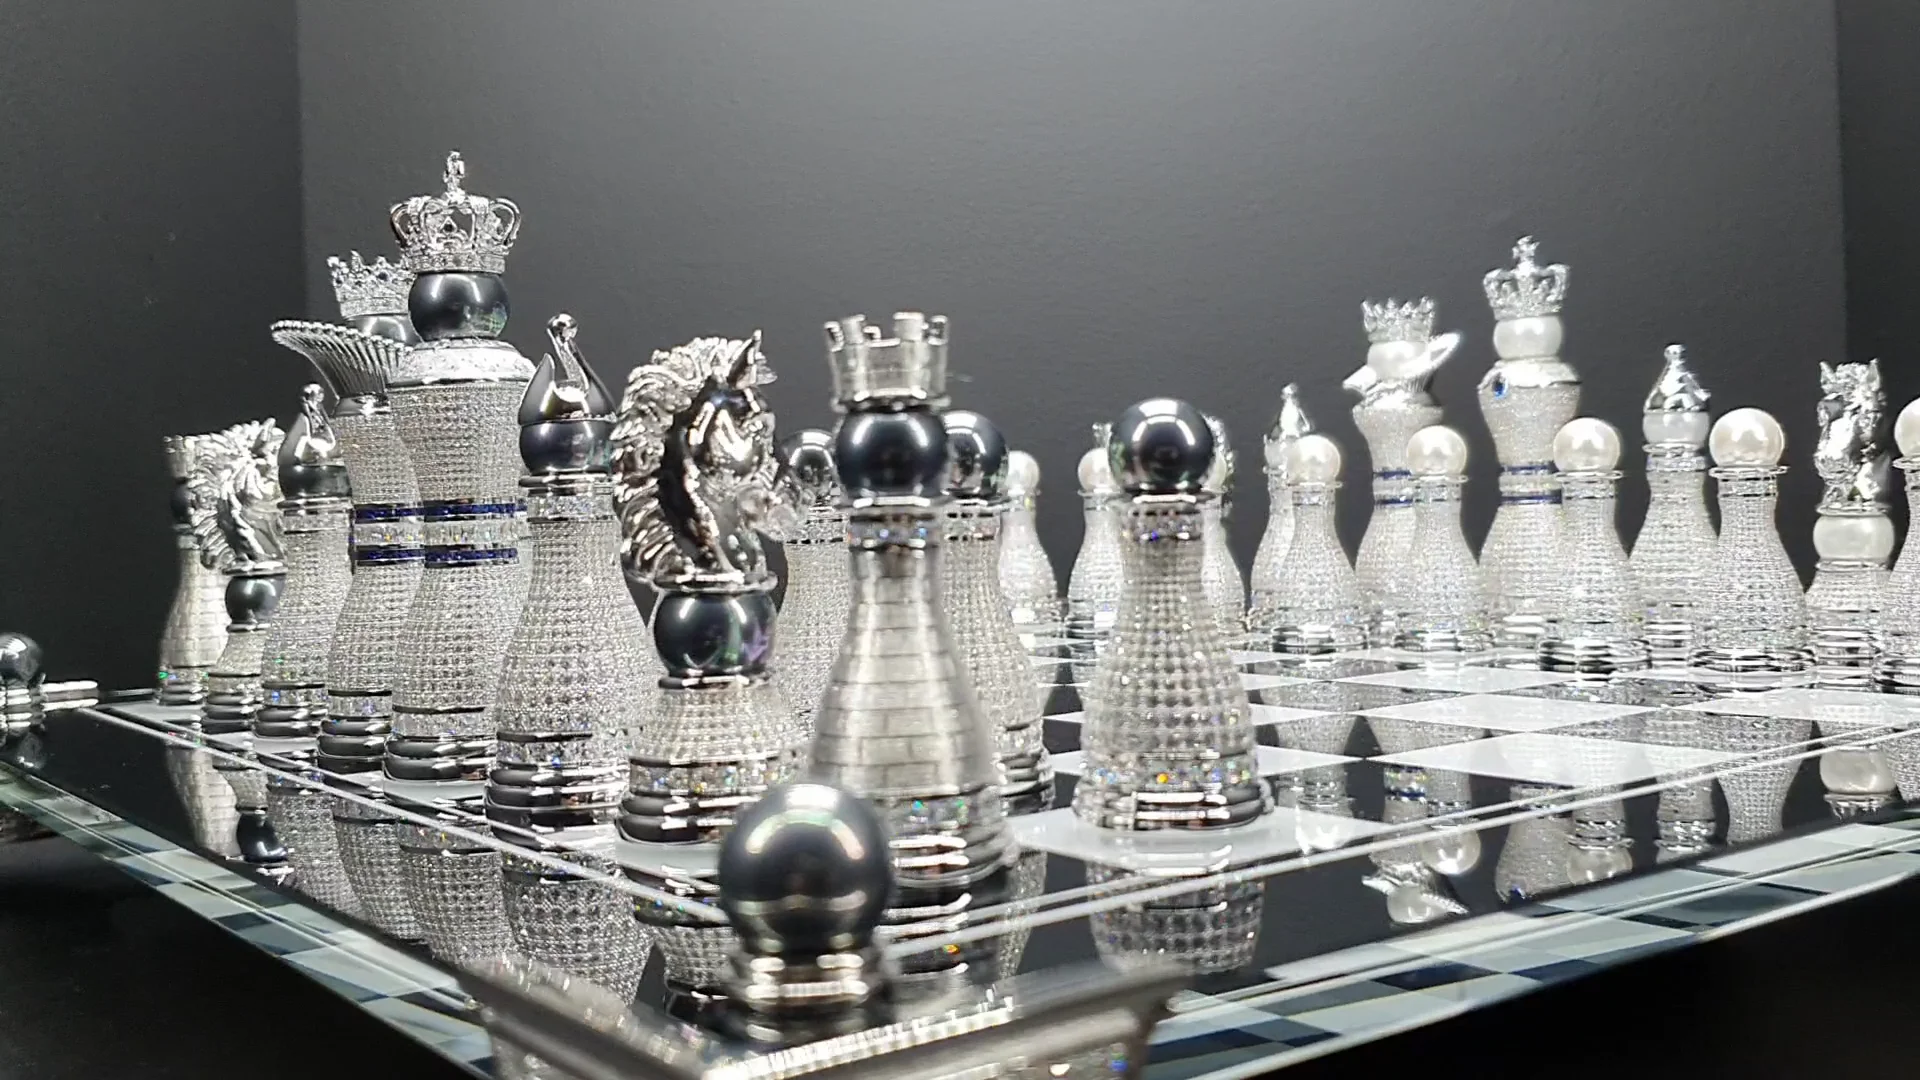 Reimagining Chess with AlphaZero on Vimeo